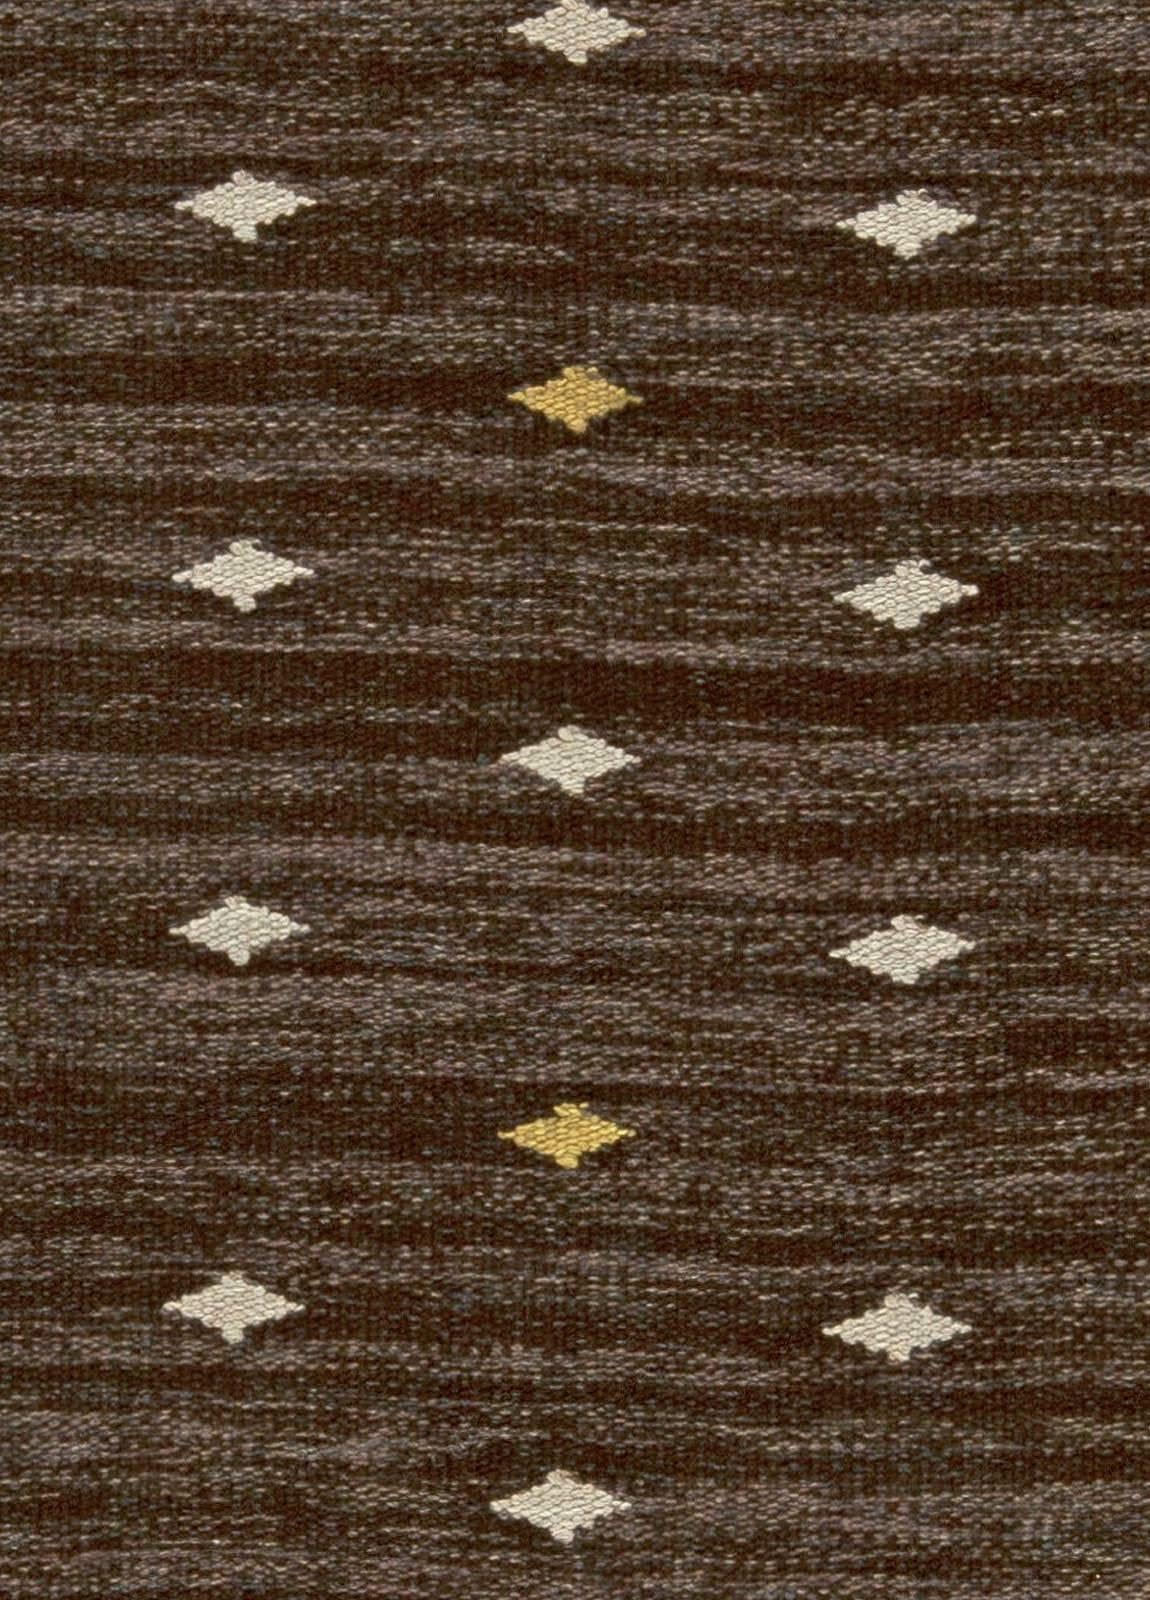 Midcentury Swedish geometric handmade wool rug signed by (SW)
Size: 6'3